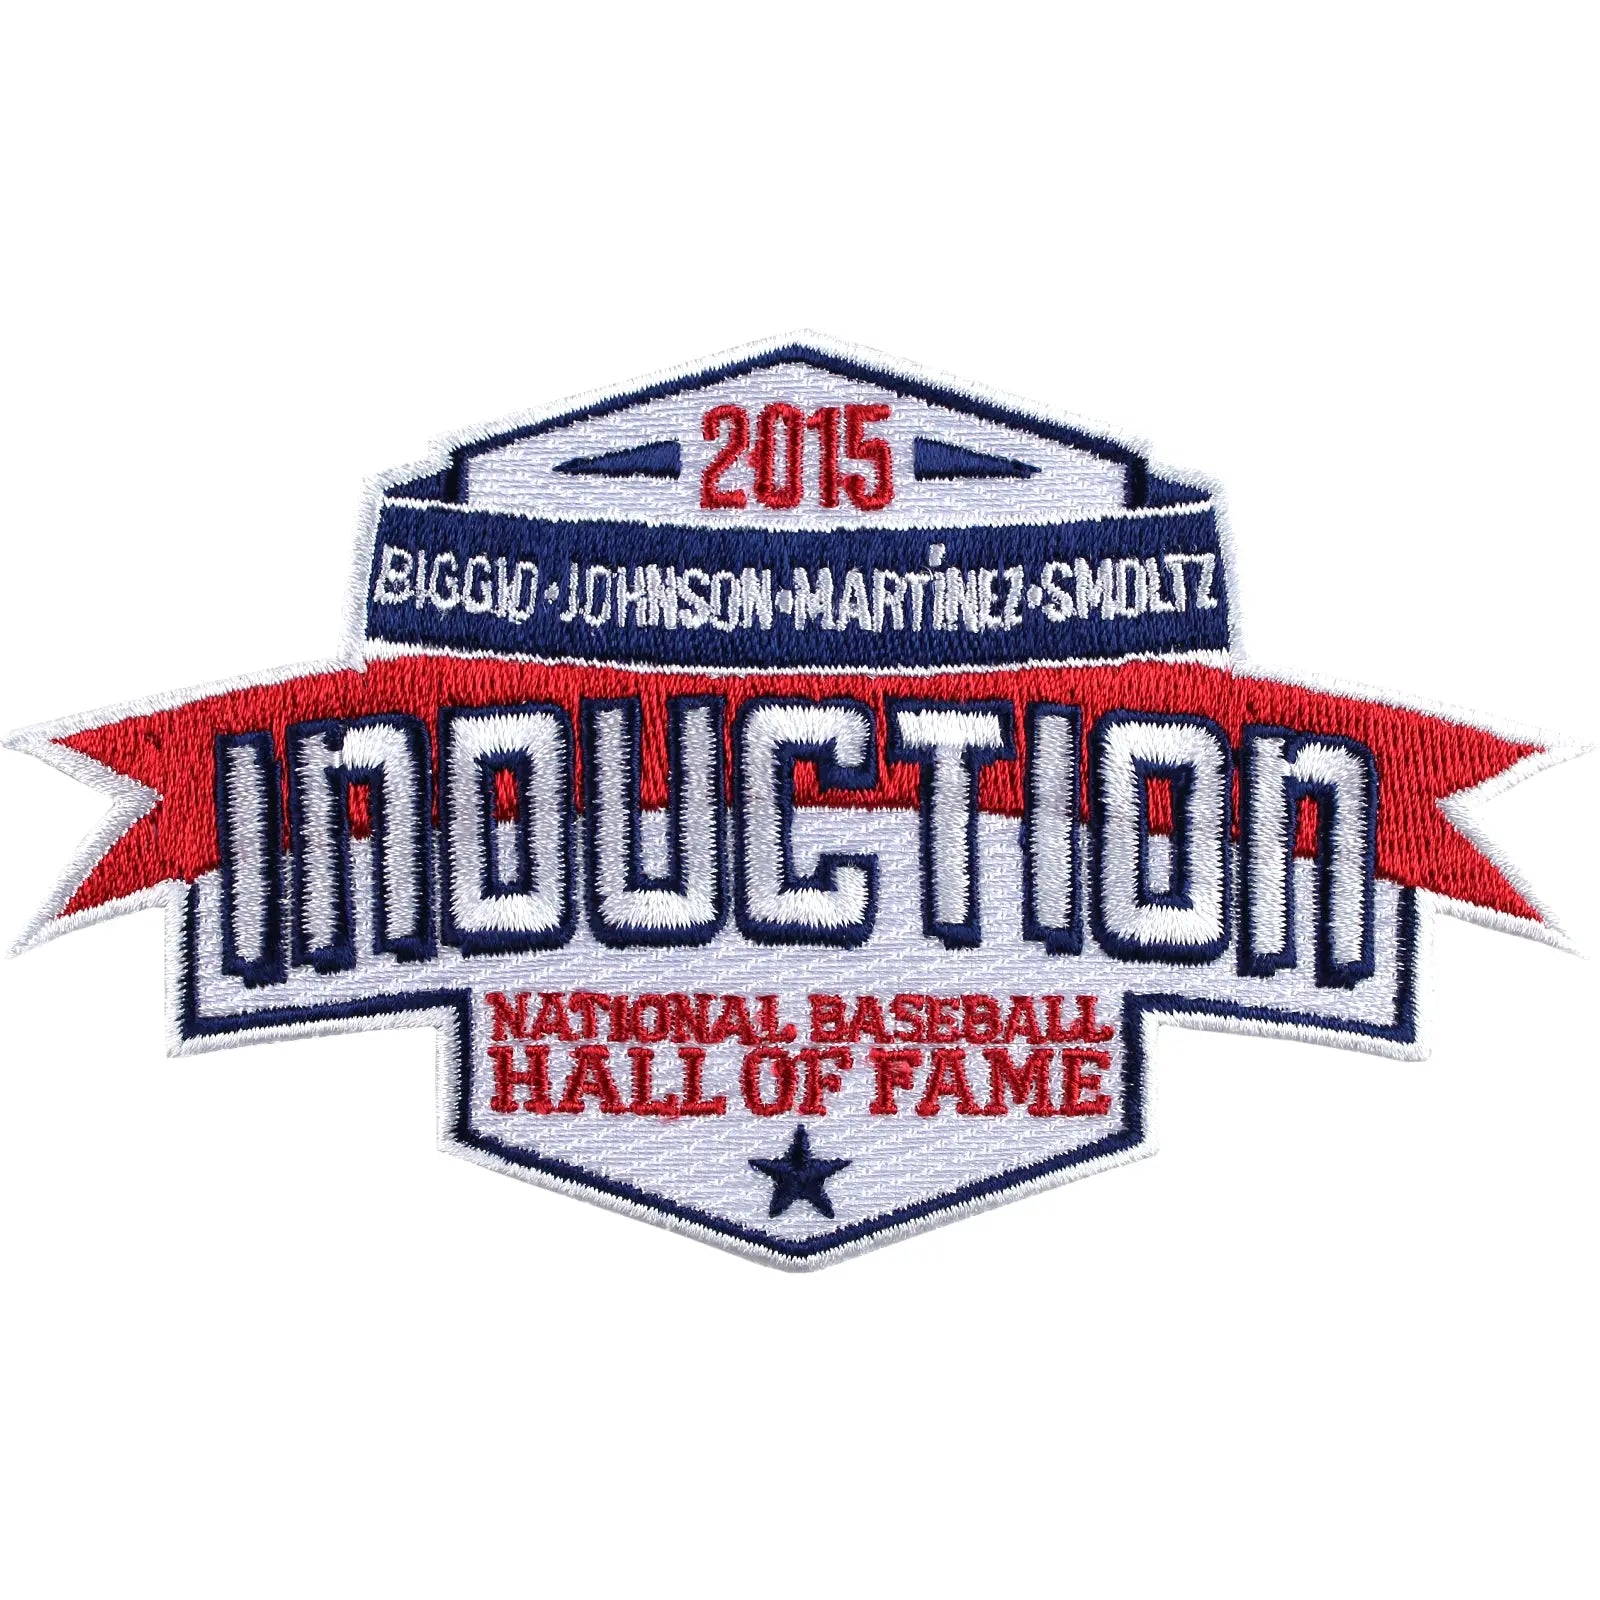 2015 National Baseball Hall Of Fame Induction Patch (Biggio Johnson Martinez Smoltz) 